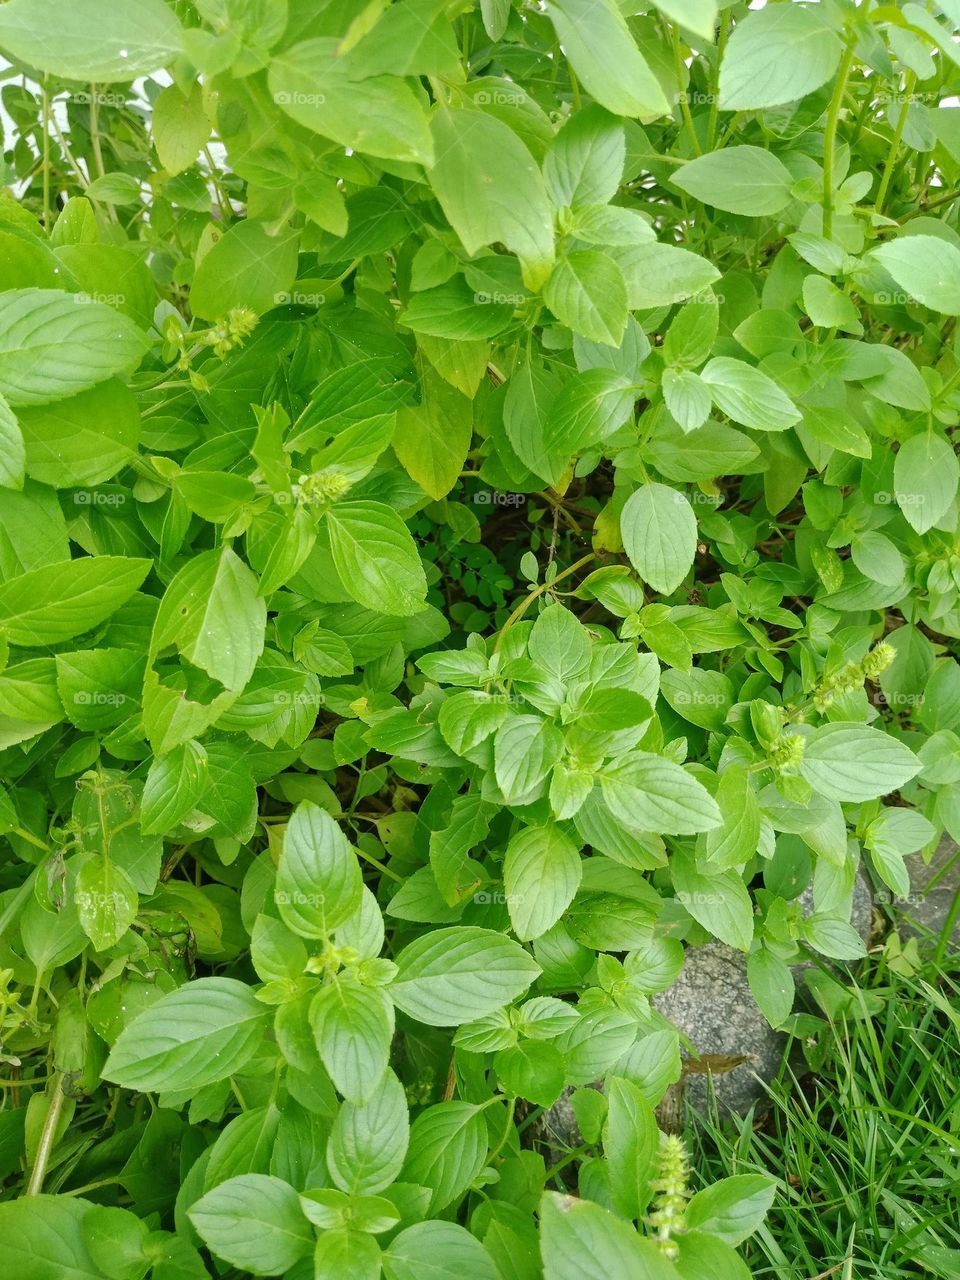 Lemon basil planted on a garden,